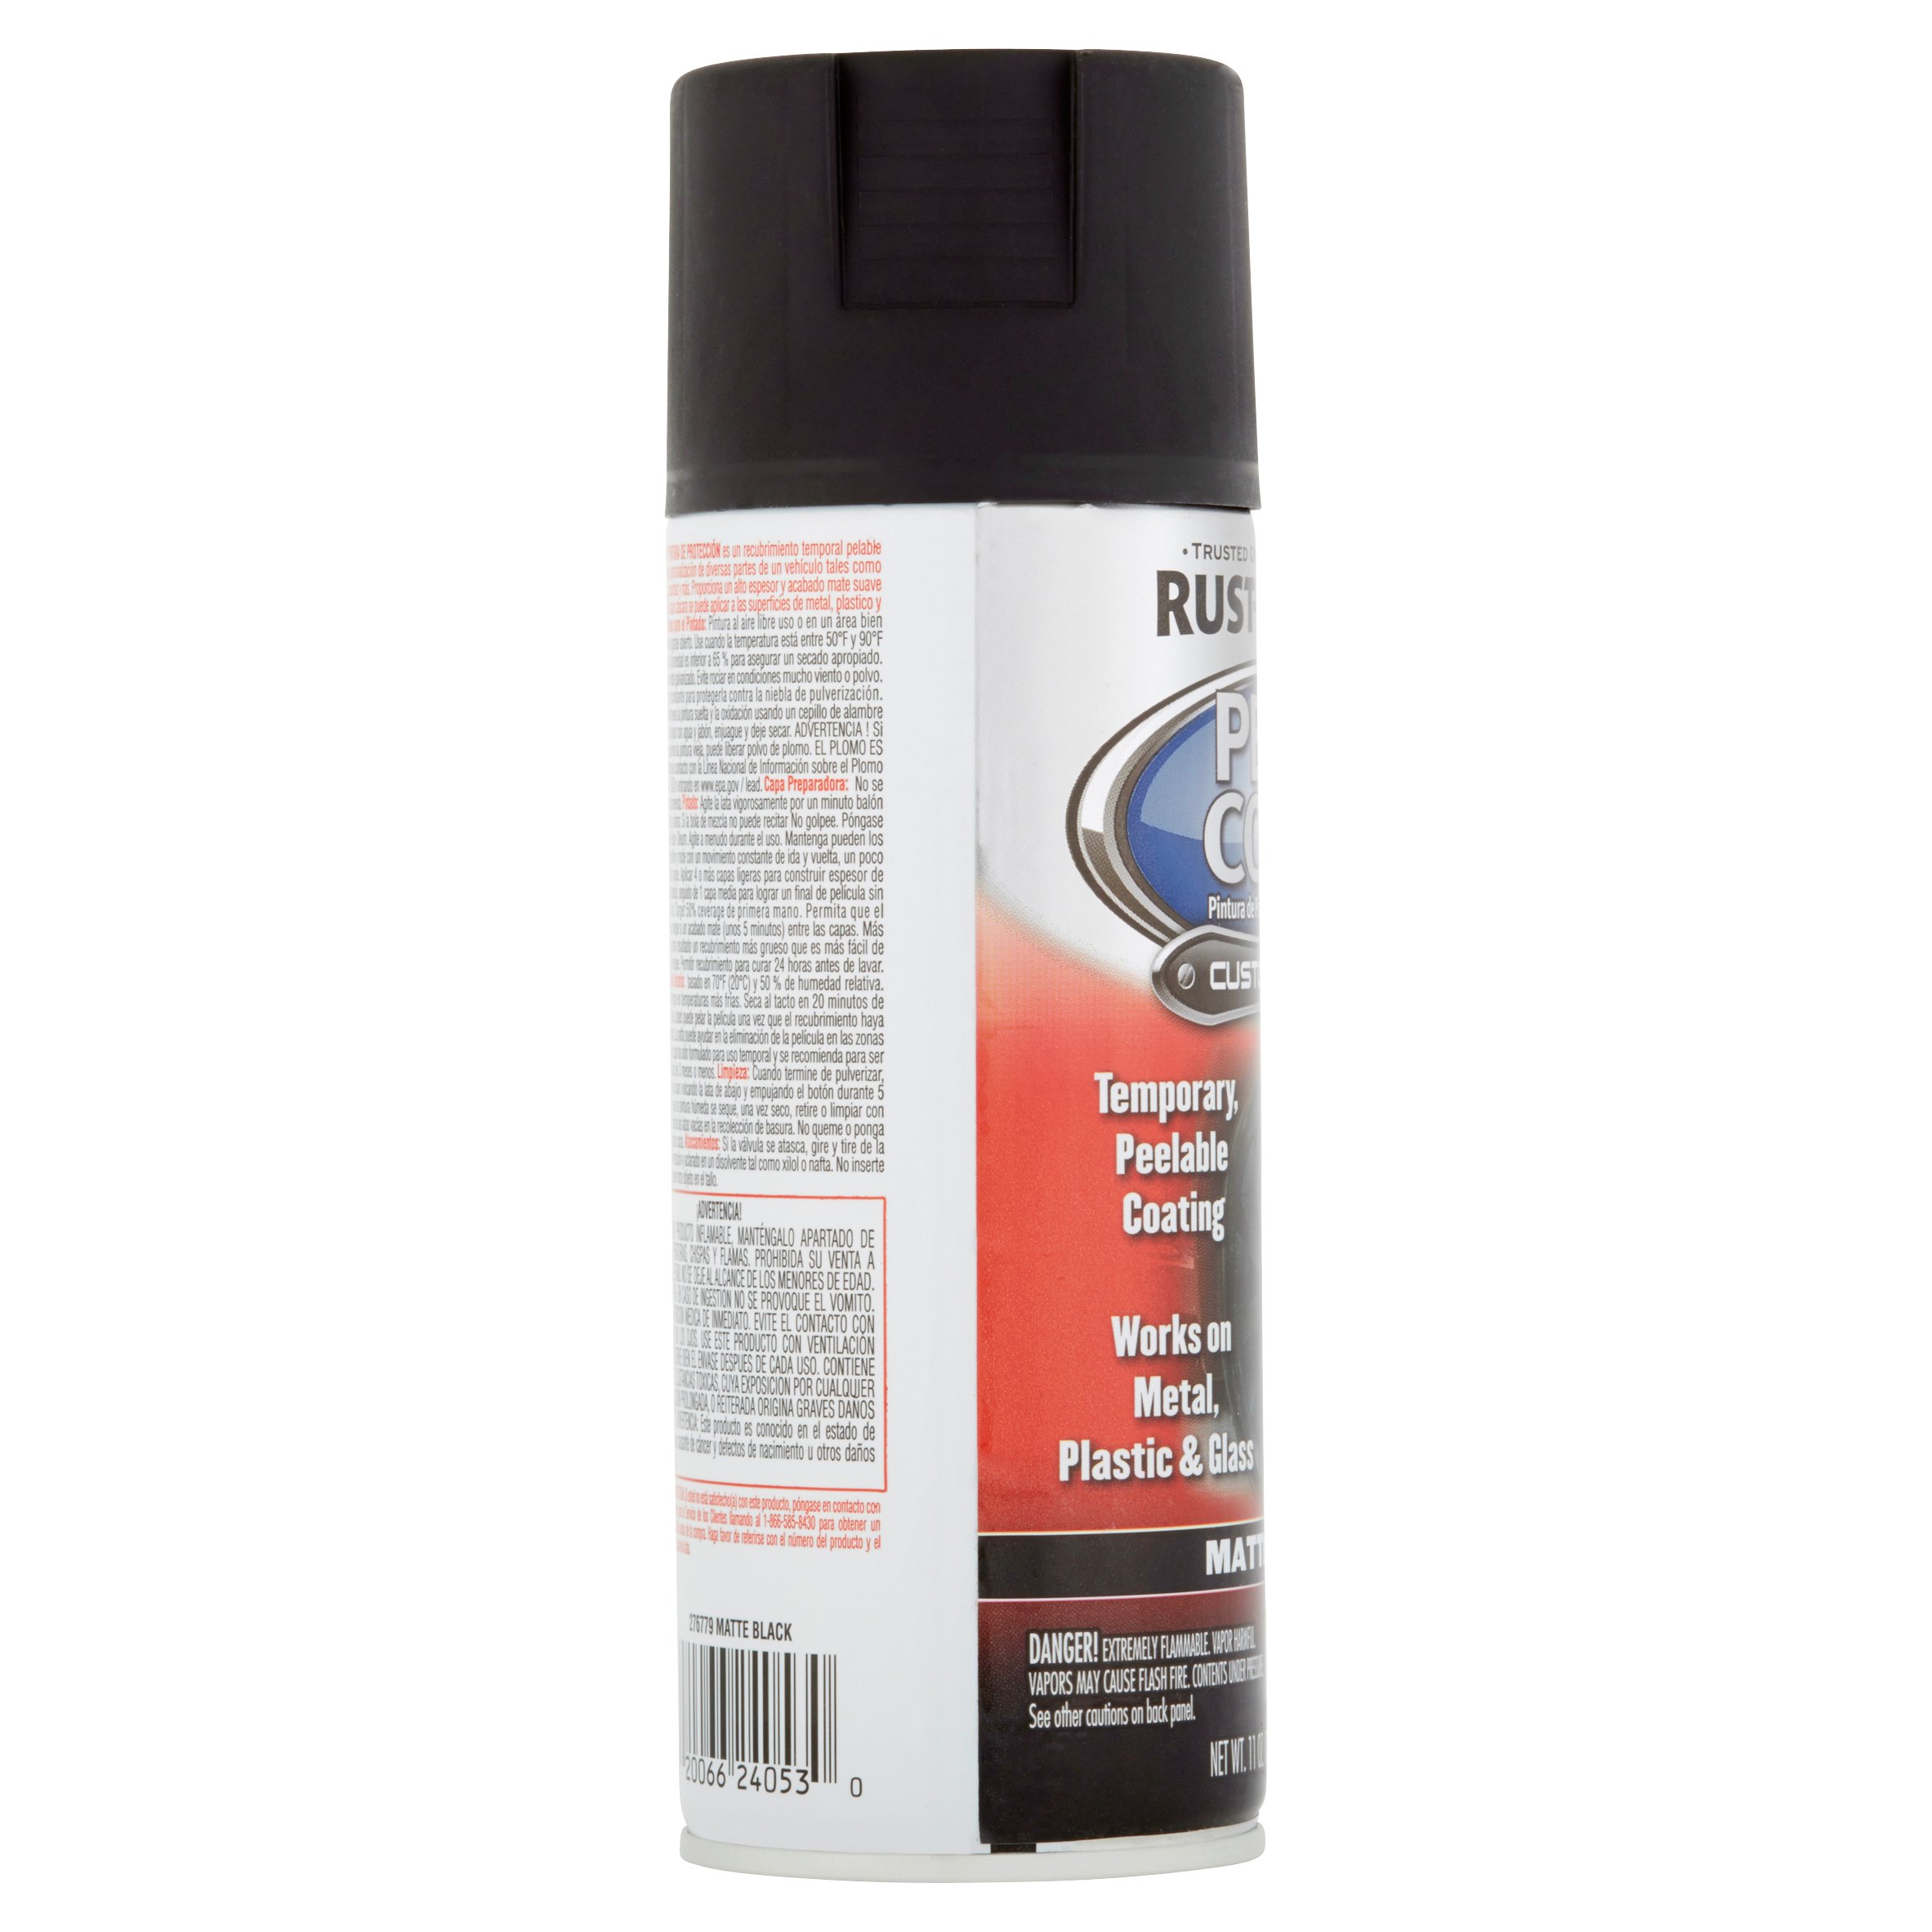 Rust-Oleum Peel Coat Matte Black Spray Paint 11 oz - image 4 of 5